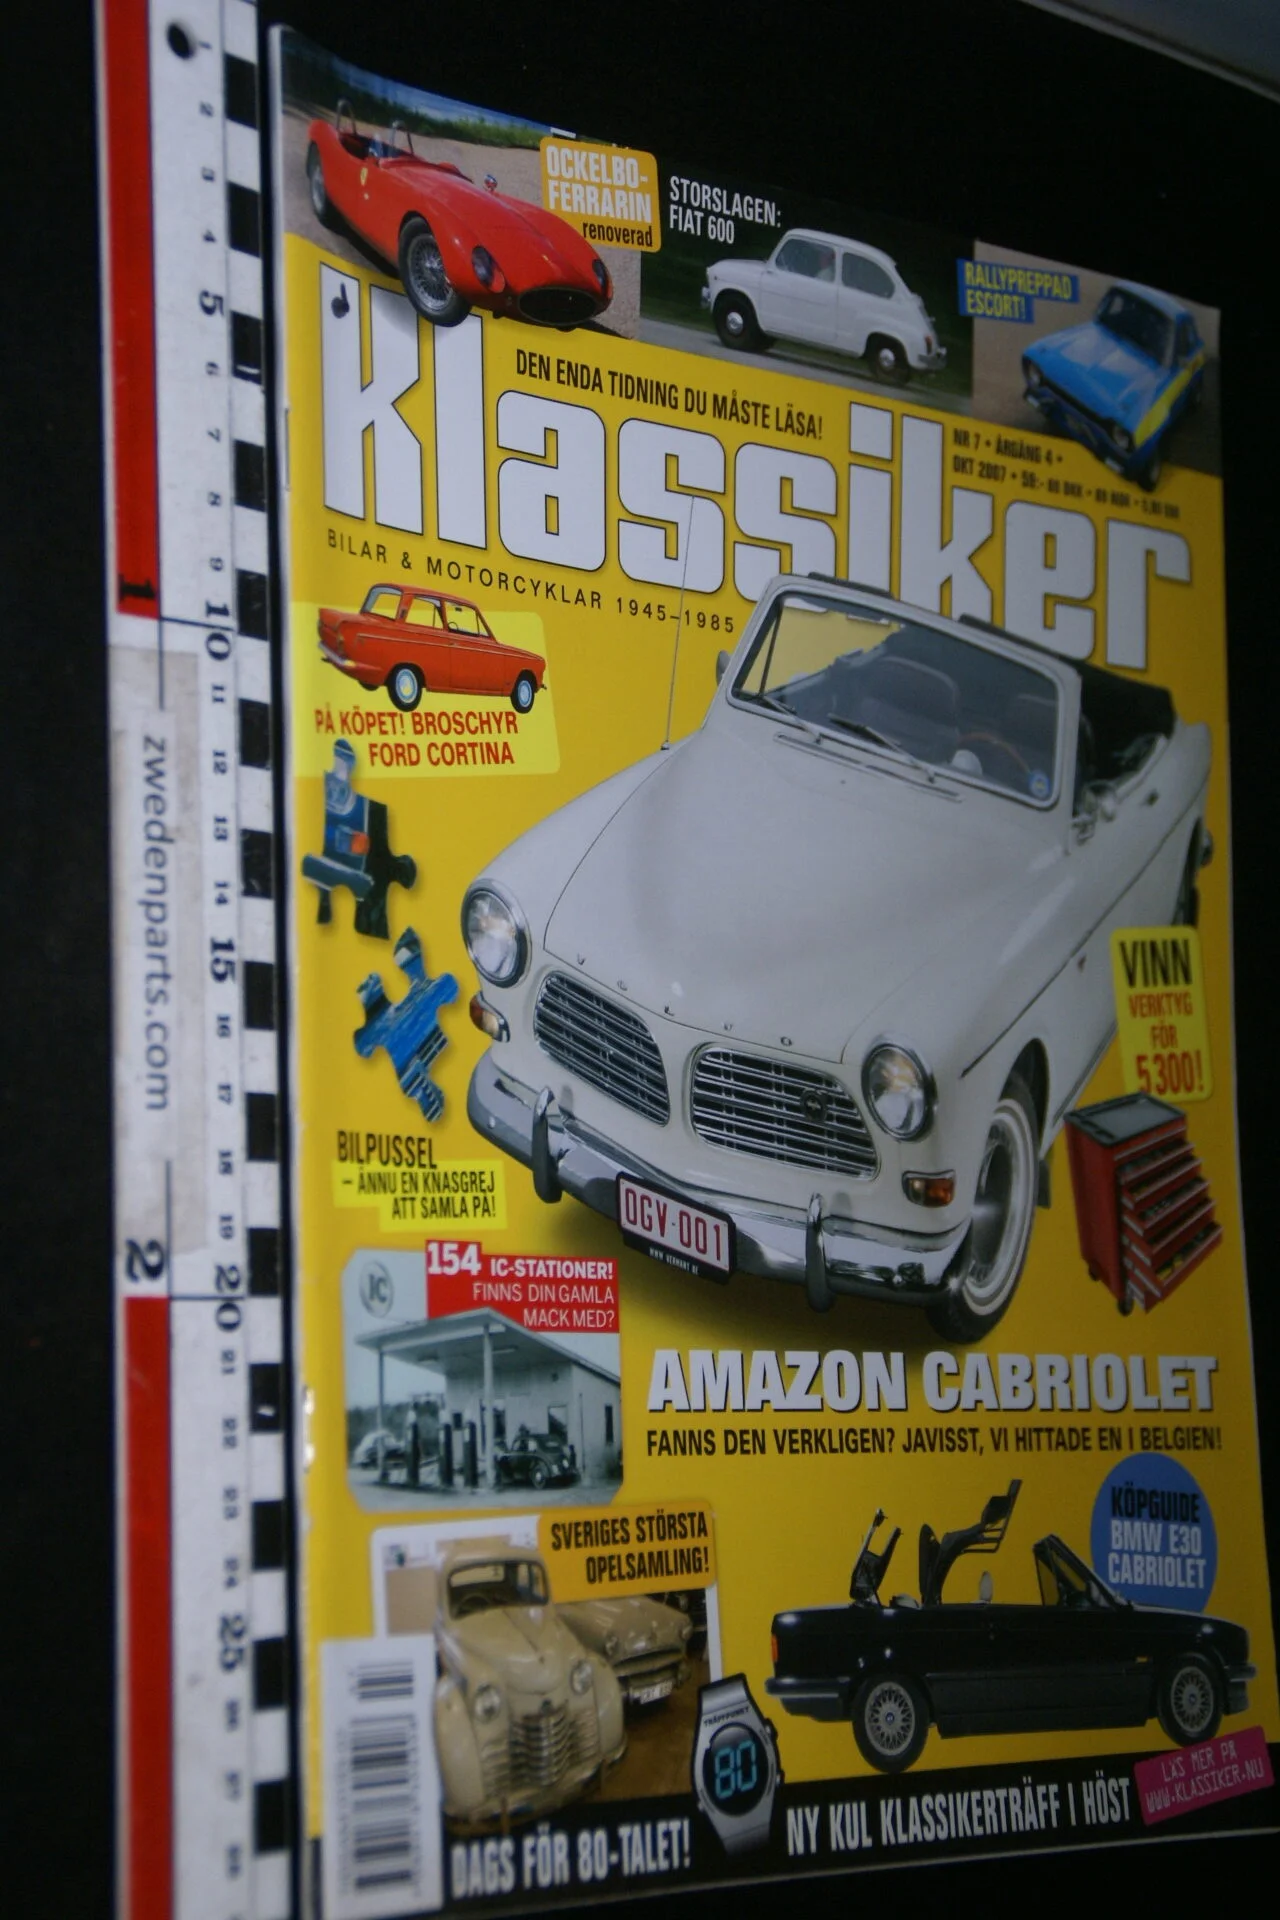 DSC00753 oktober 2007 tijdschrift Klassiker met Volvo Amazon cabriolet, Daf 66, Cadillac, Fiat, Svenska-8ed3540c